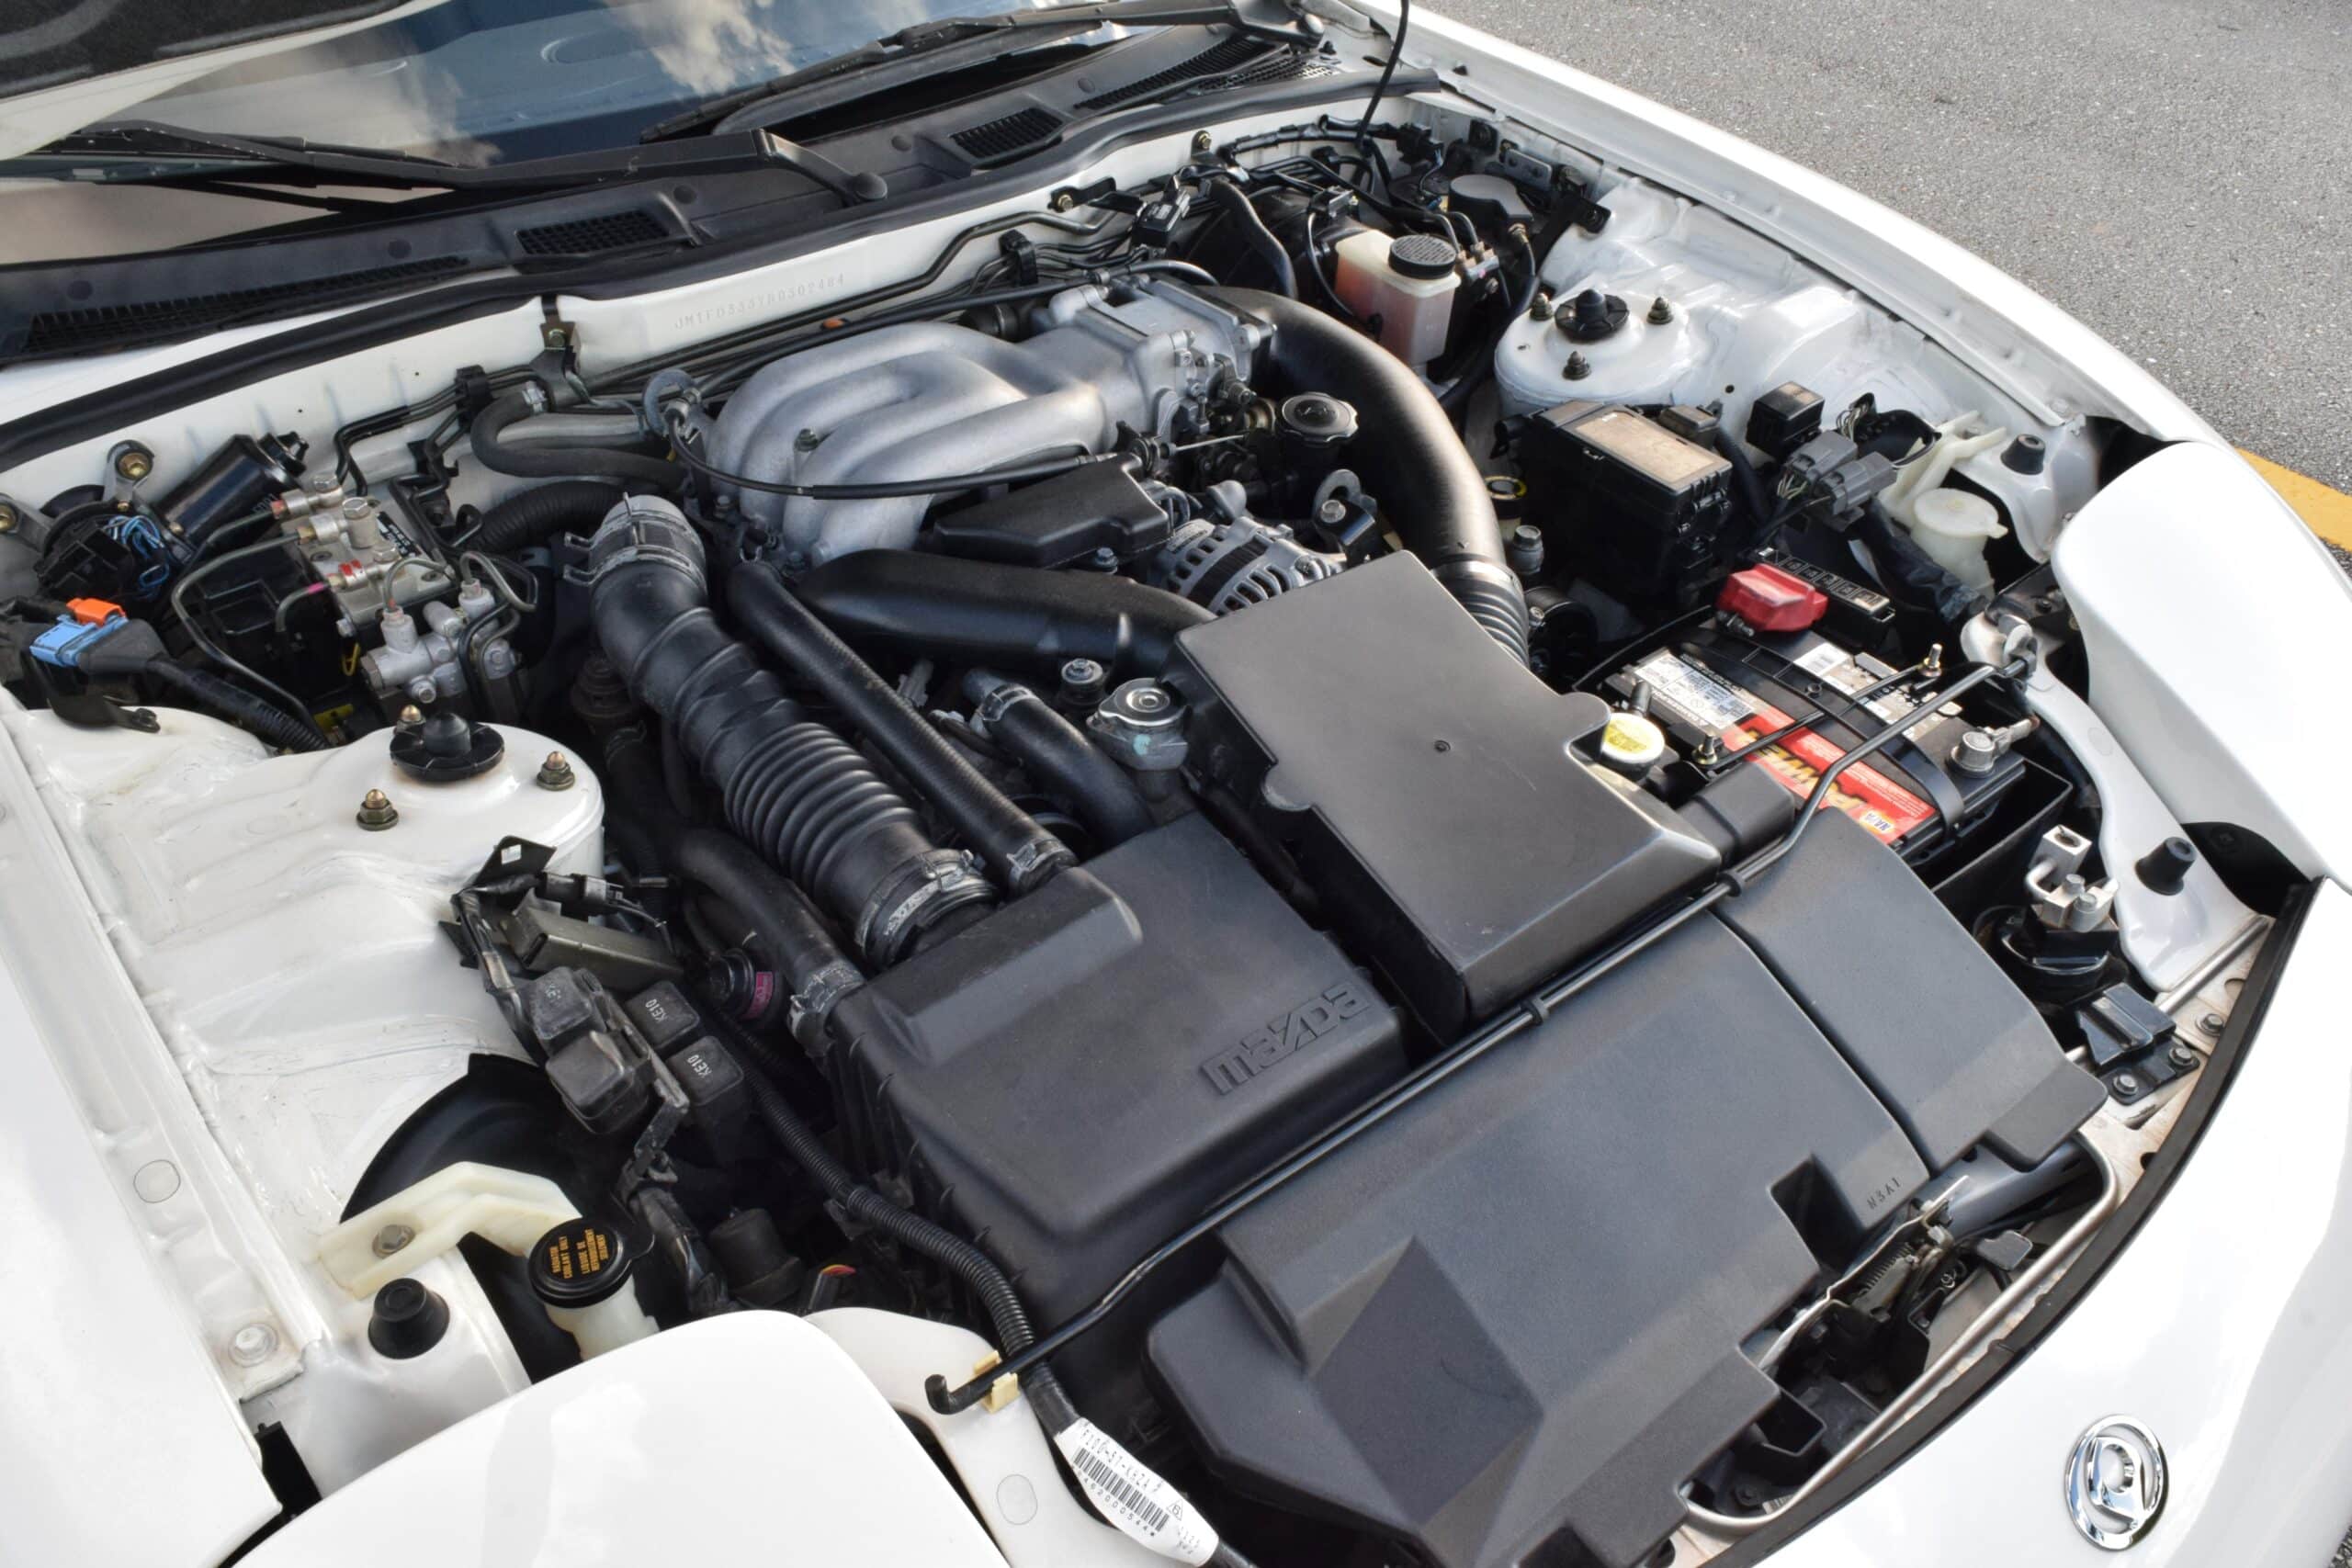 1994 Mazda RX-7 FD Turbo 100% Stock- Original Paint -ONLY 58K Miles – 1 of 26 USDM Chaste White SPEC Cars